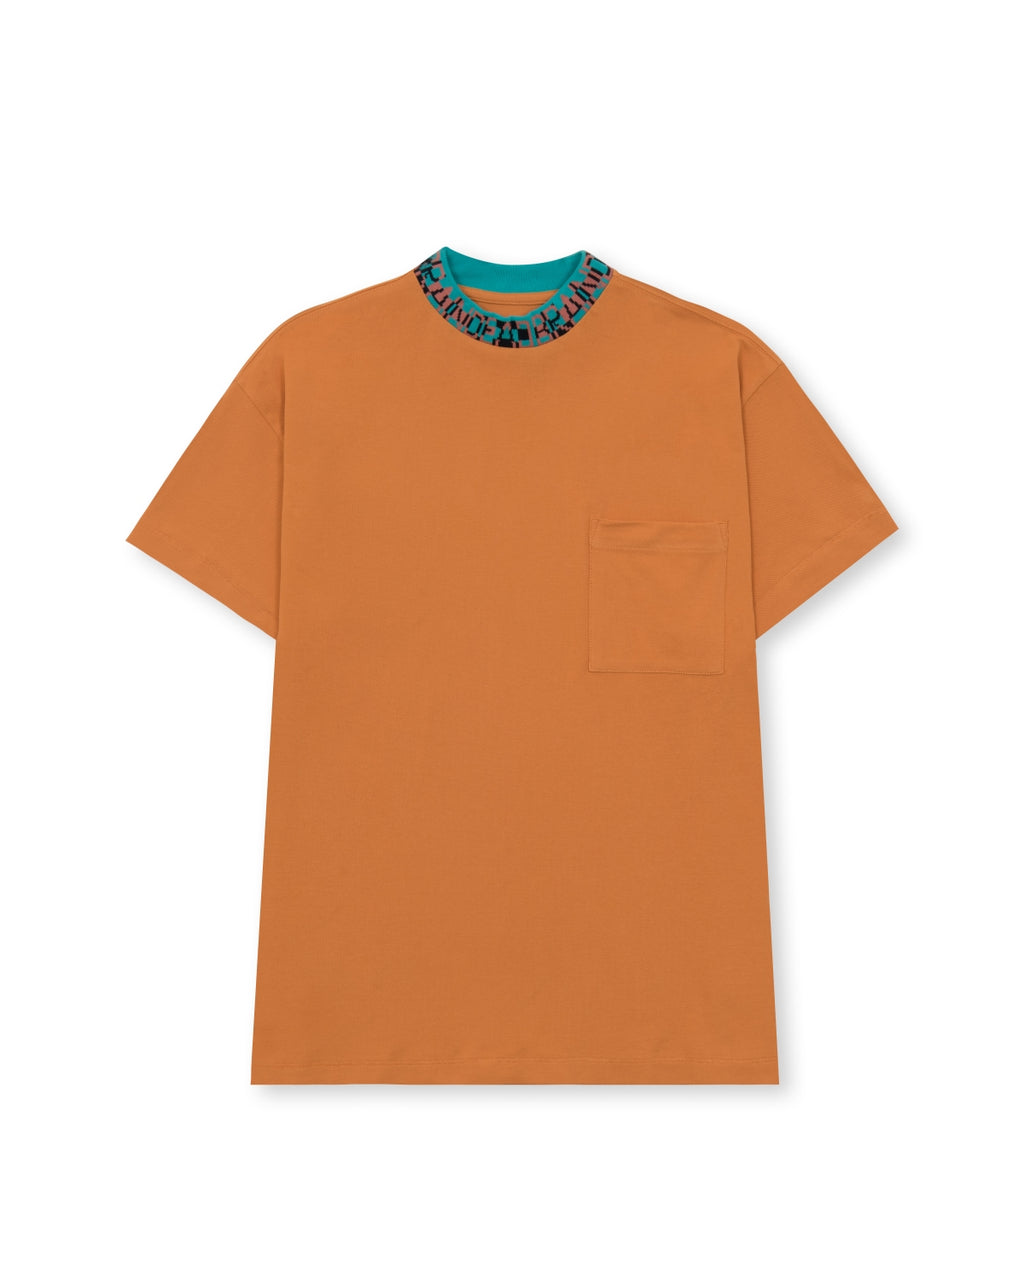 Jacquarded Collar Pique Mock Neck Shirt - Orange